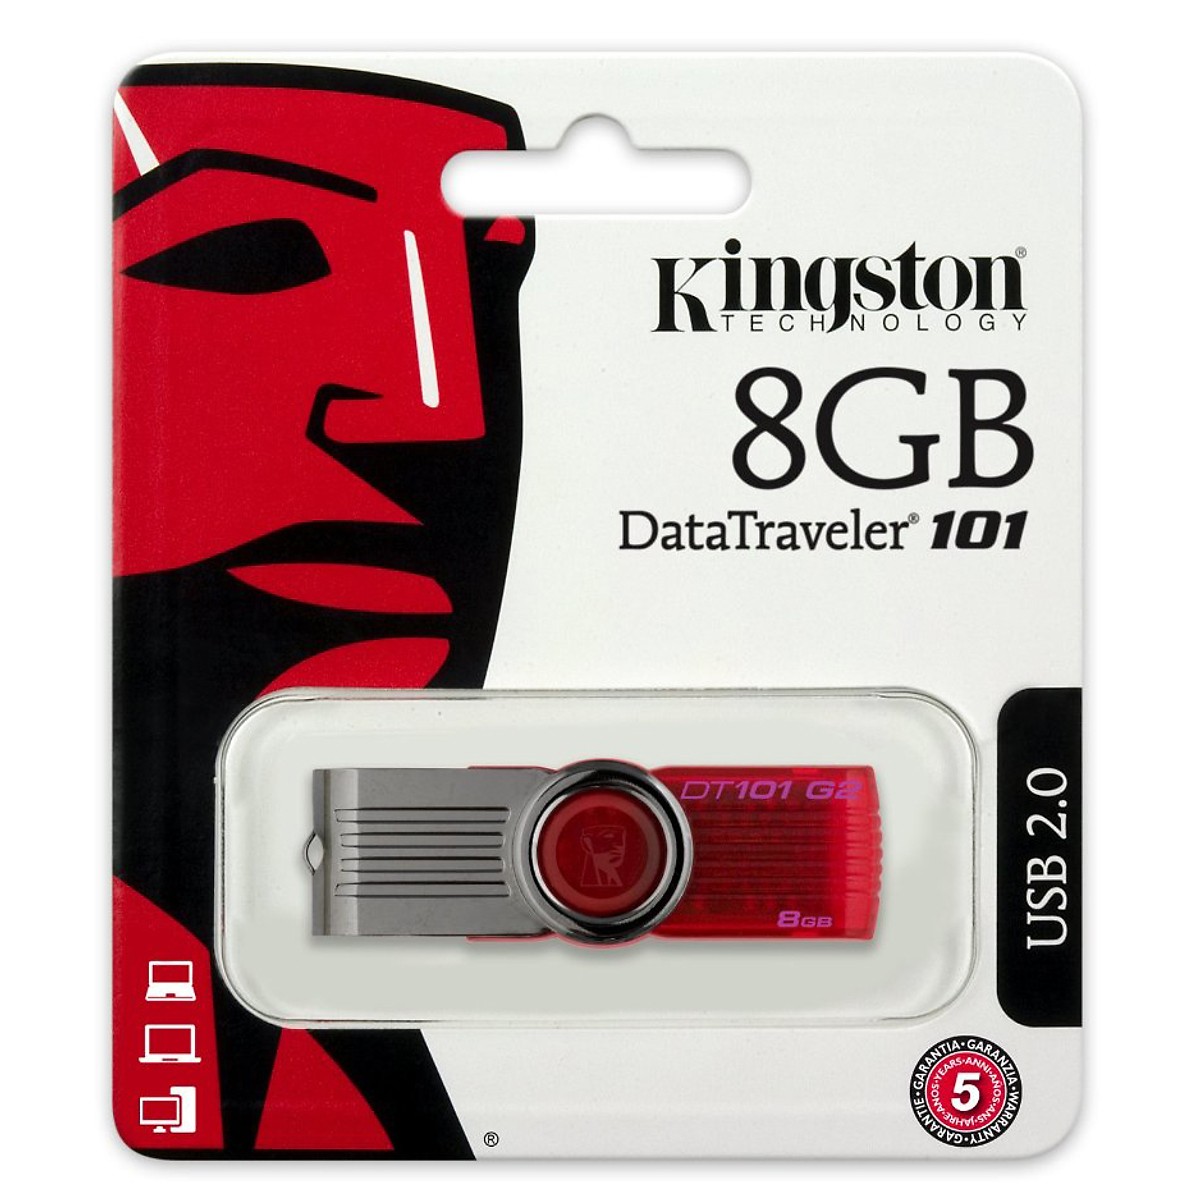 USB Kingston 8GB DT101 G2